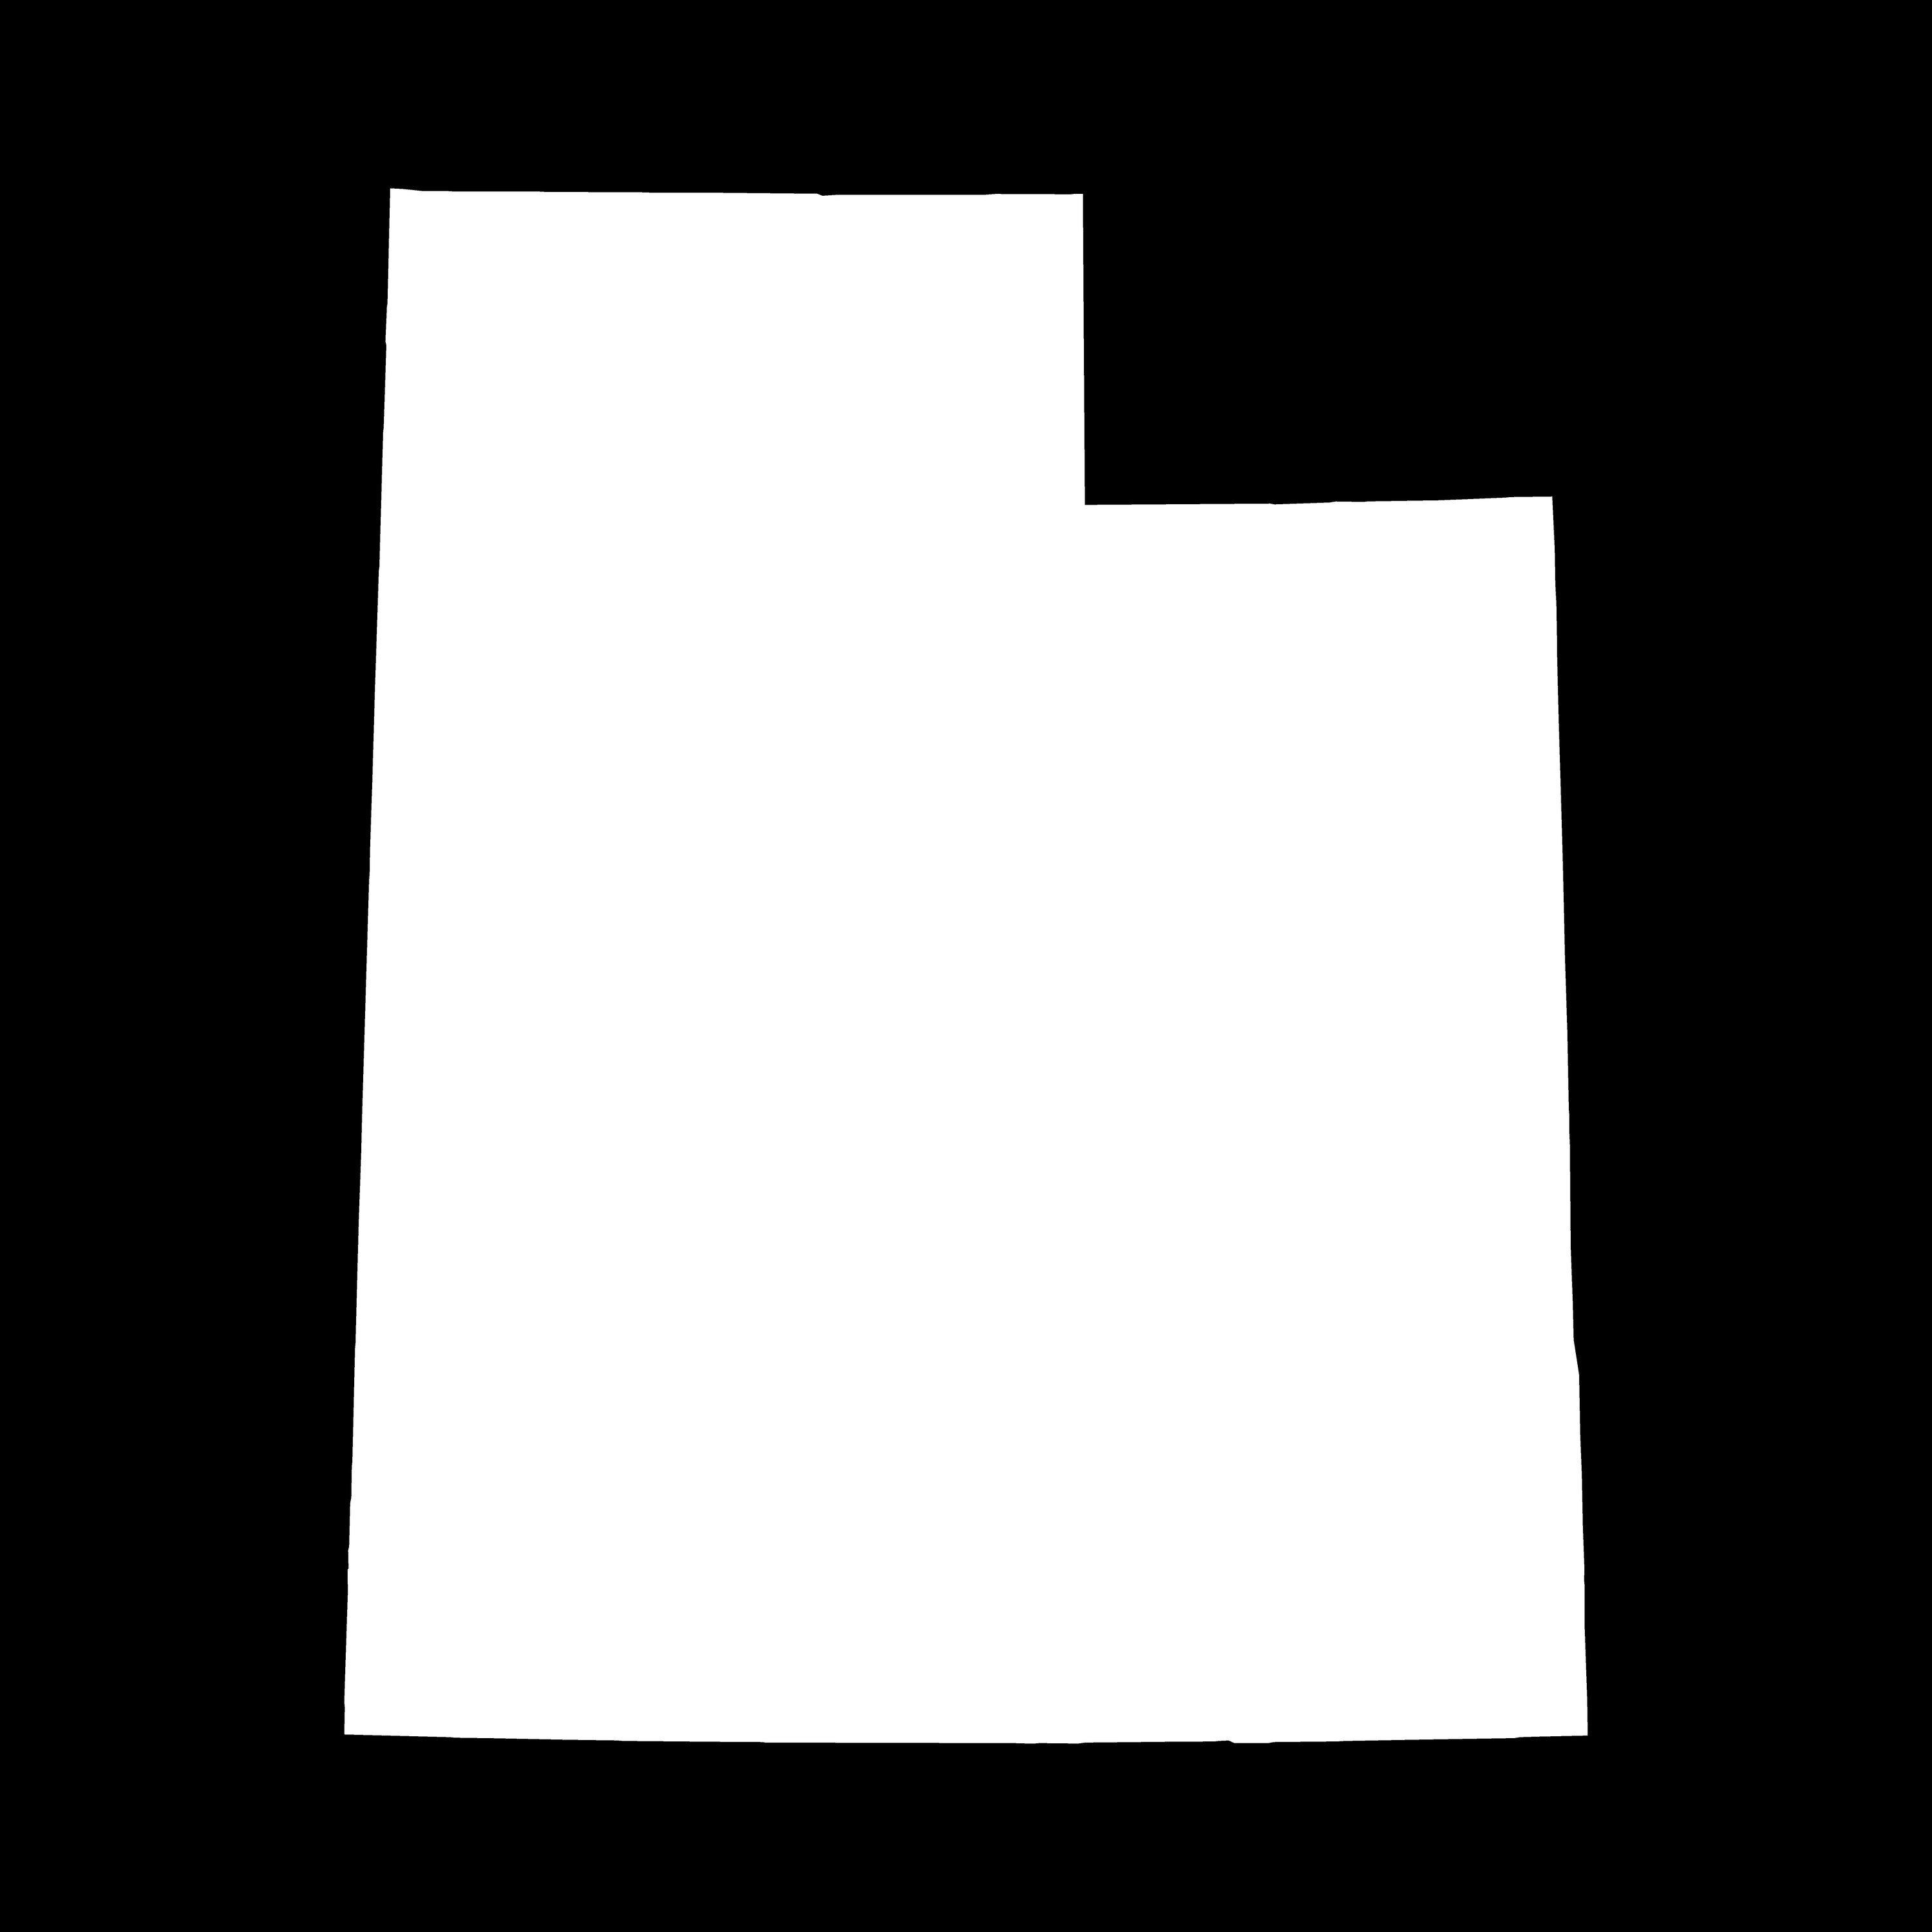 A silhouette of Utah